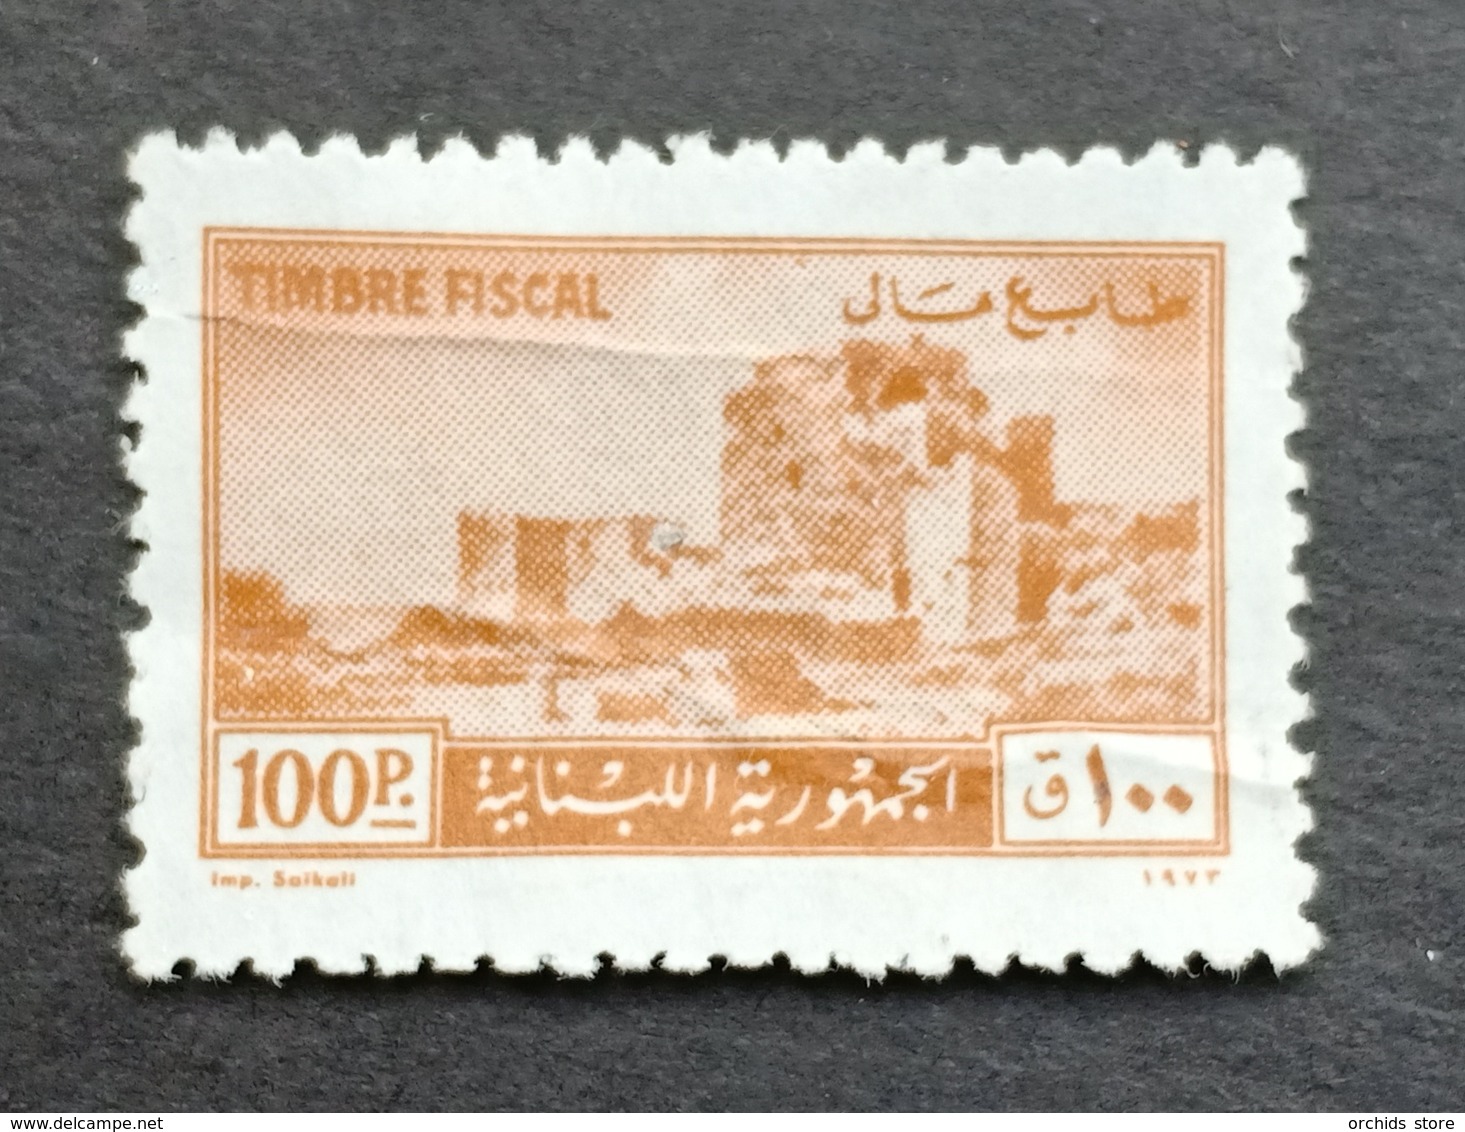 EI - Lebanon 1973 Fiscal Revebue Stamp 100p - Lebanon